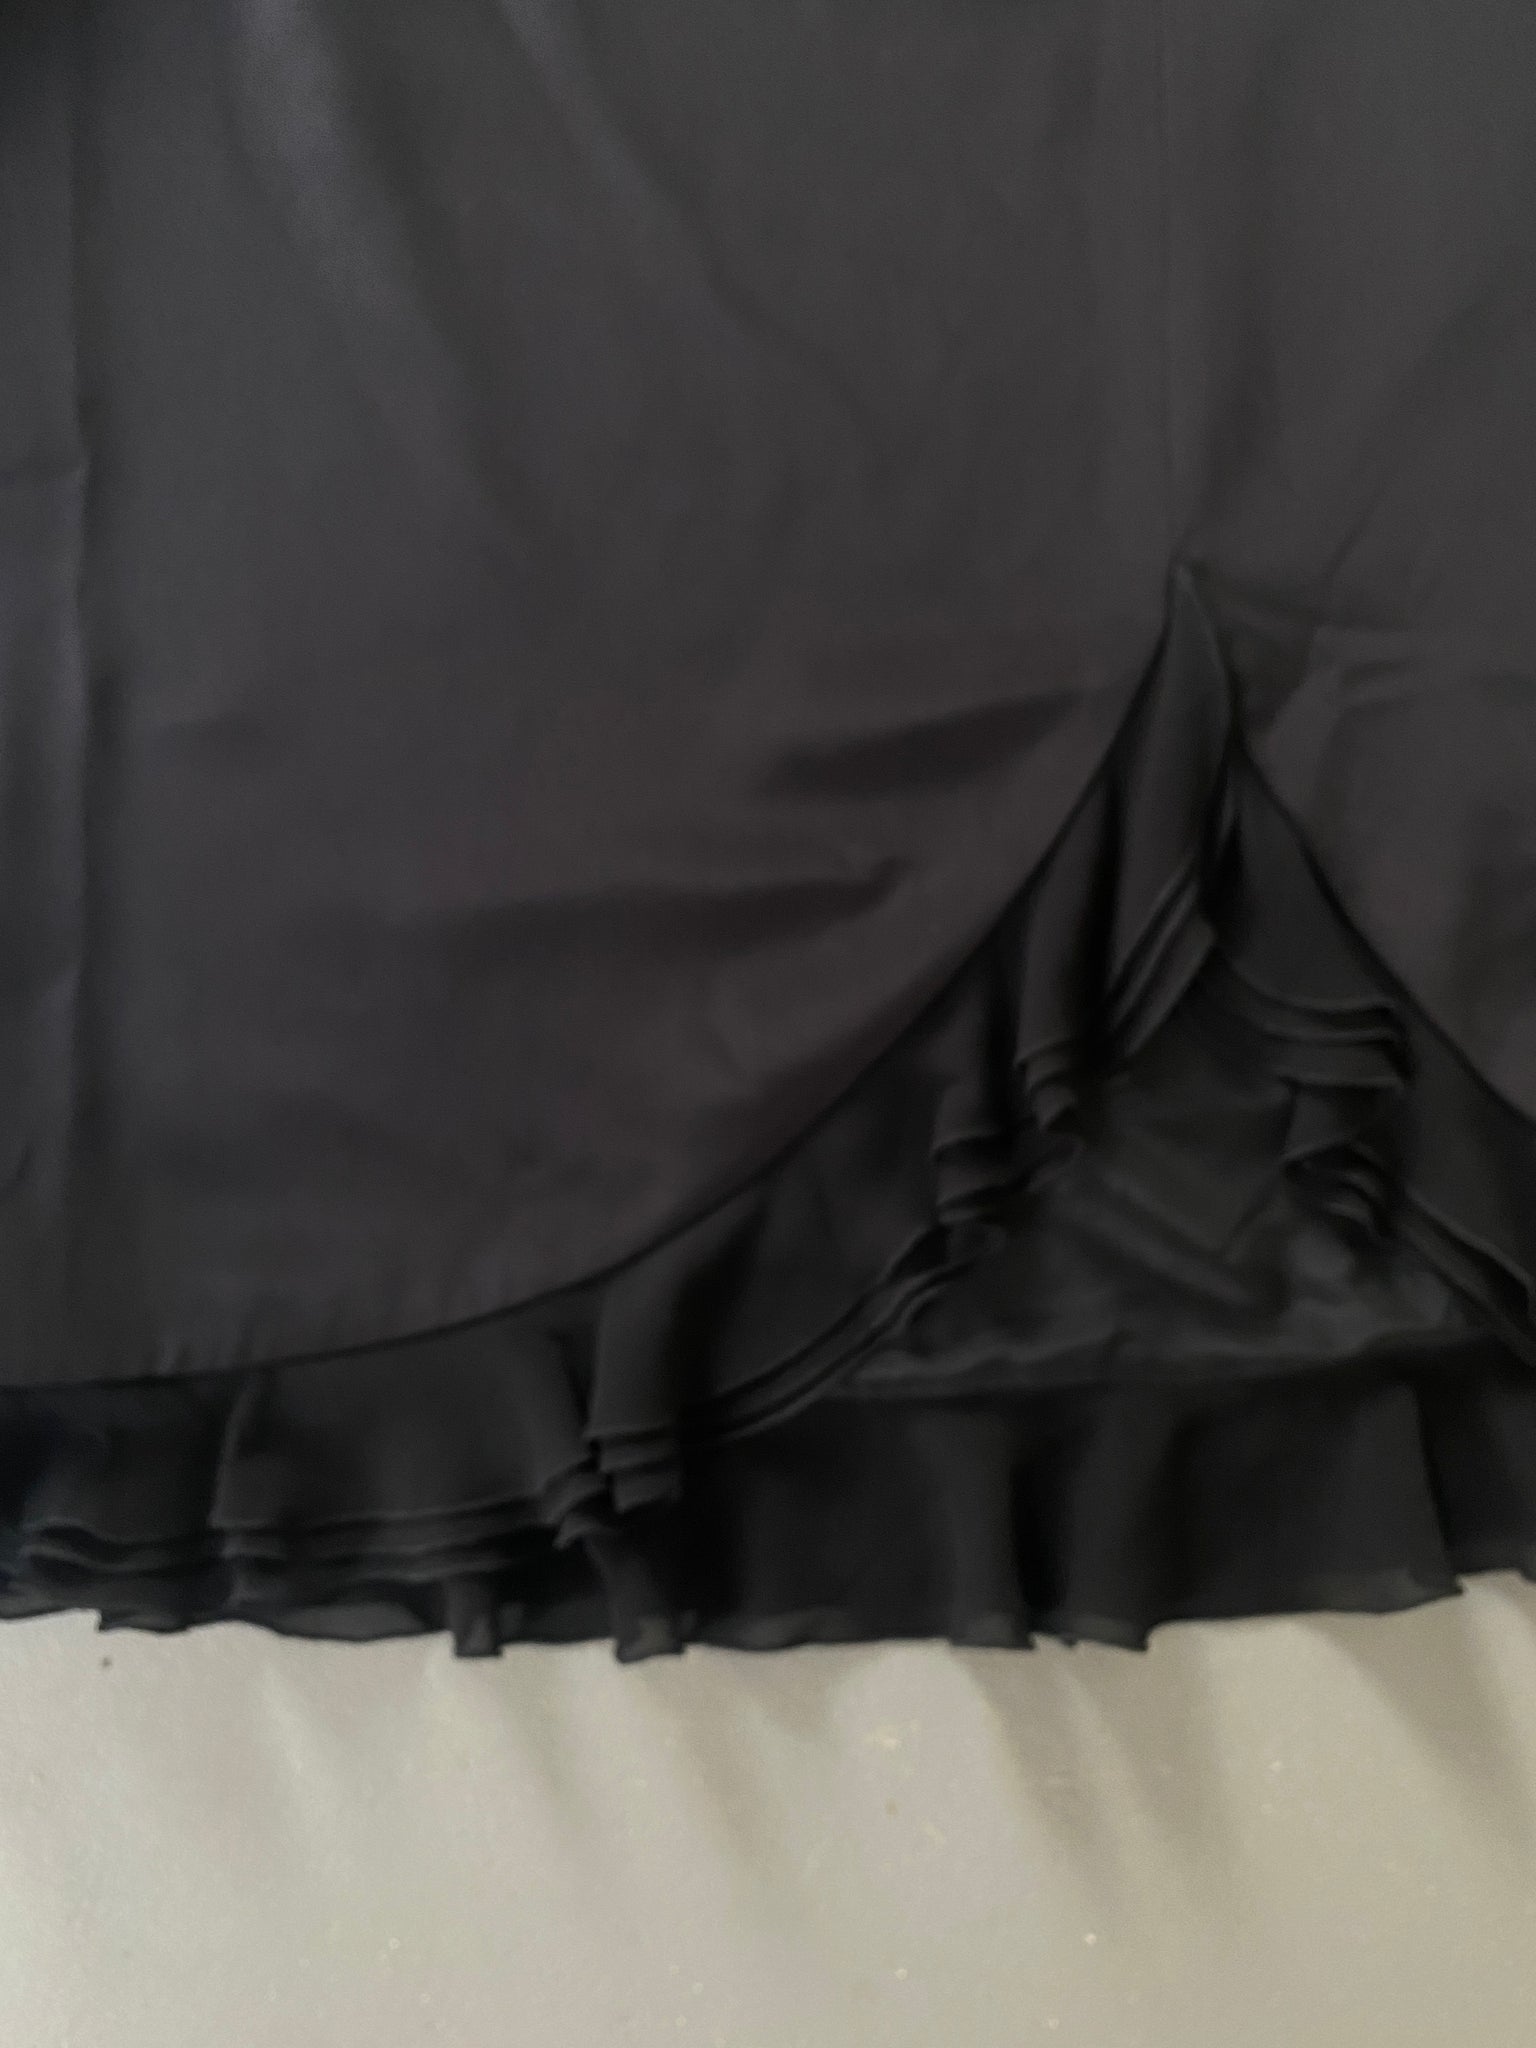 Vintage Escada Silk Skirt (S)